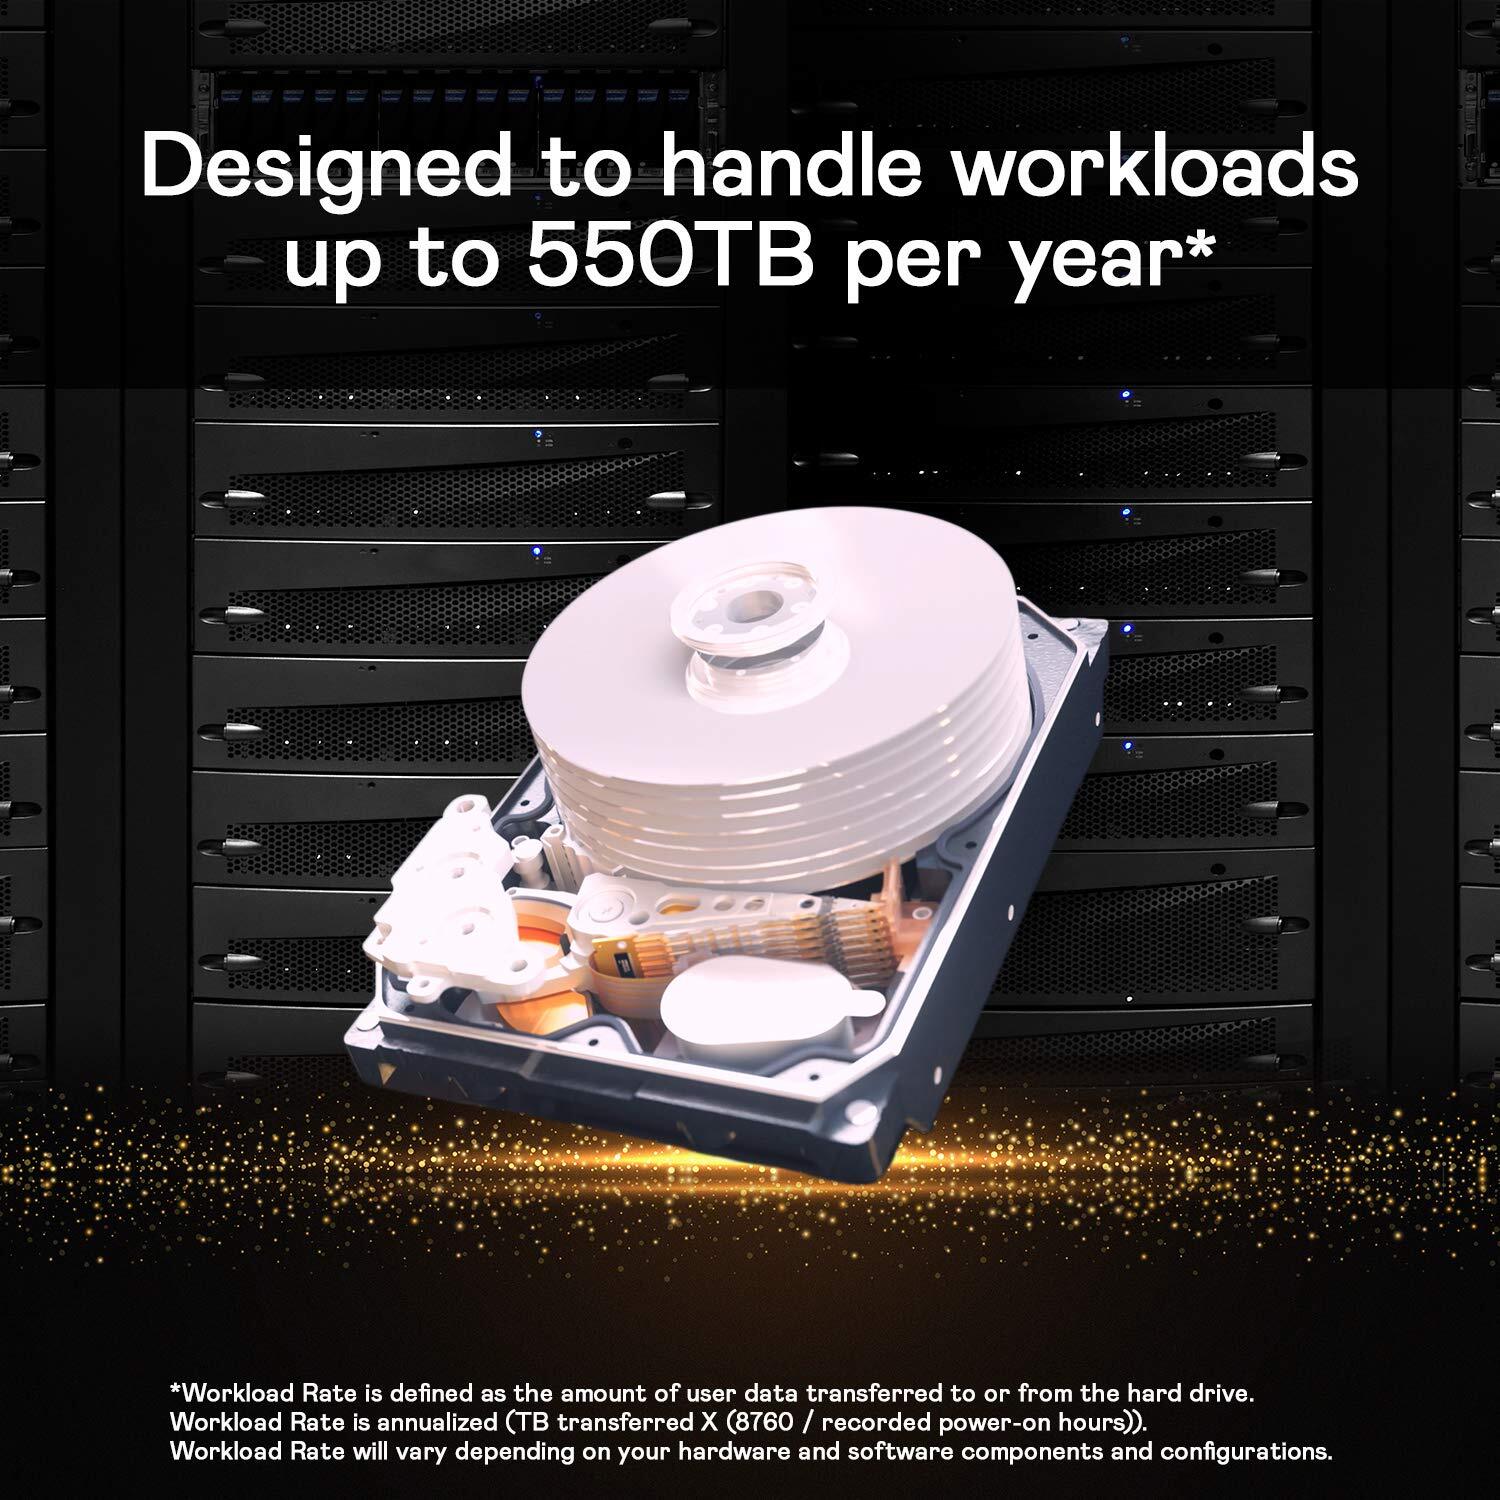 Western Digital WD Gold 10TB Enterprise Class Internal Hard Drive -7200 RPM Class, SATA 6 Gb/s, 256 MB Cache, 3.5"